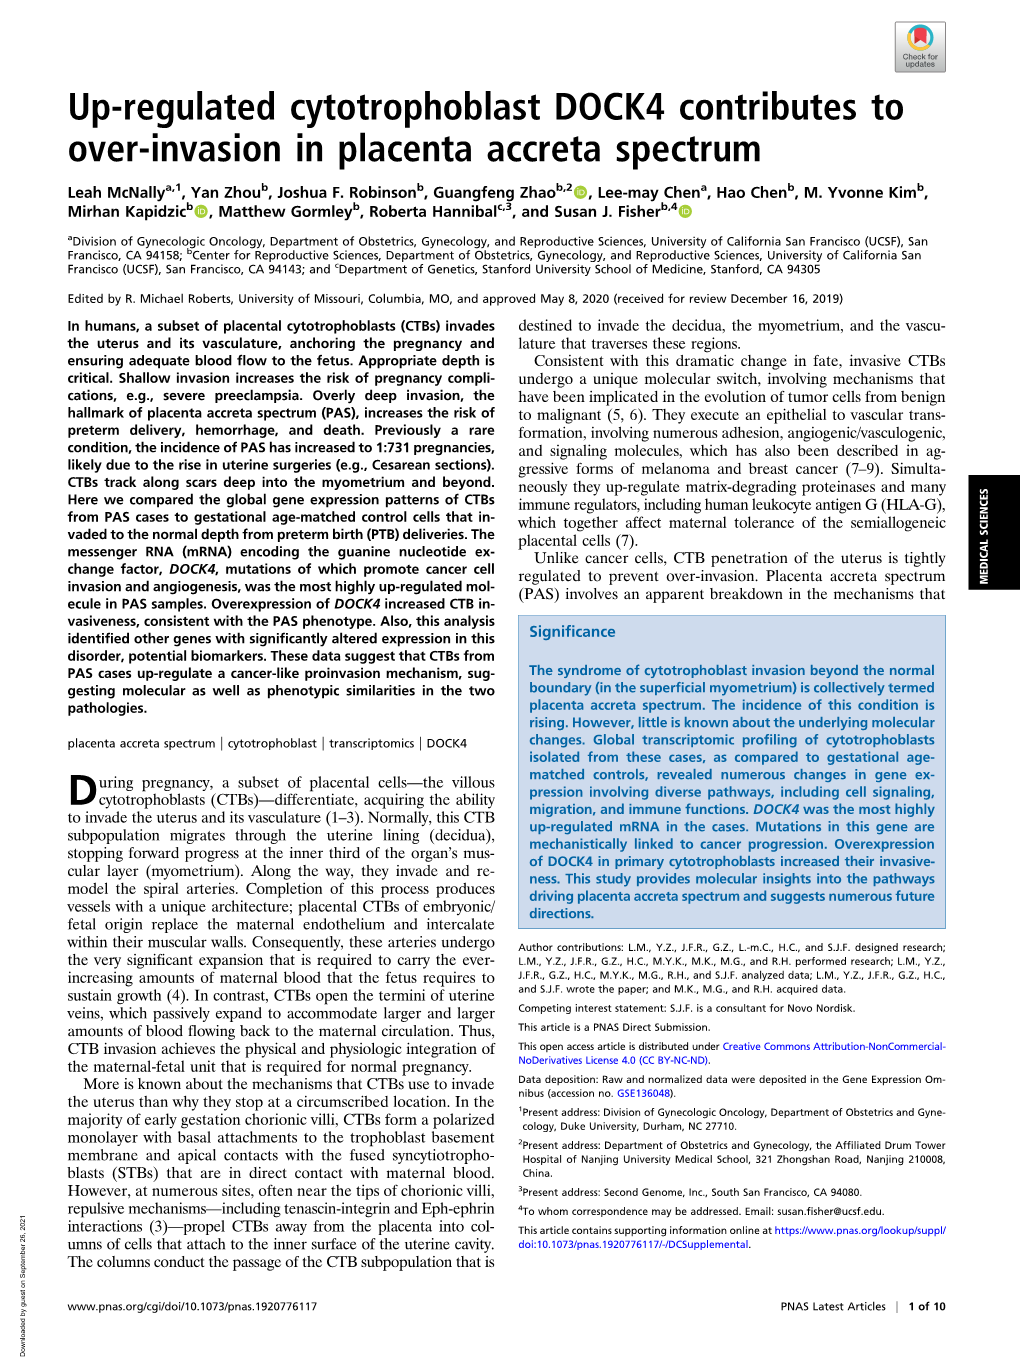 Up-Regulated Cytotrophoblast DOCK4 Contributes to Over-Invasion in Placenta Accreta Spectrum